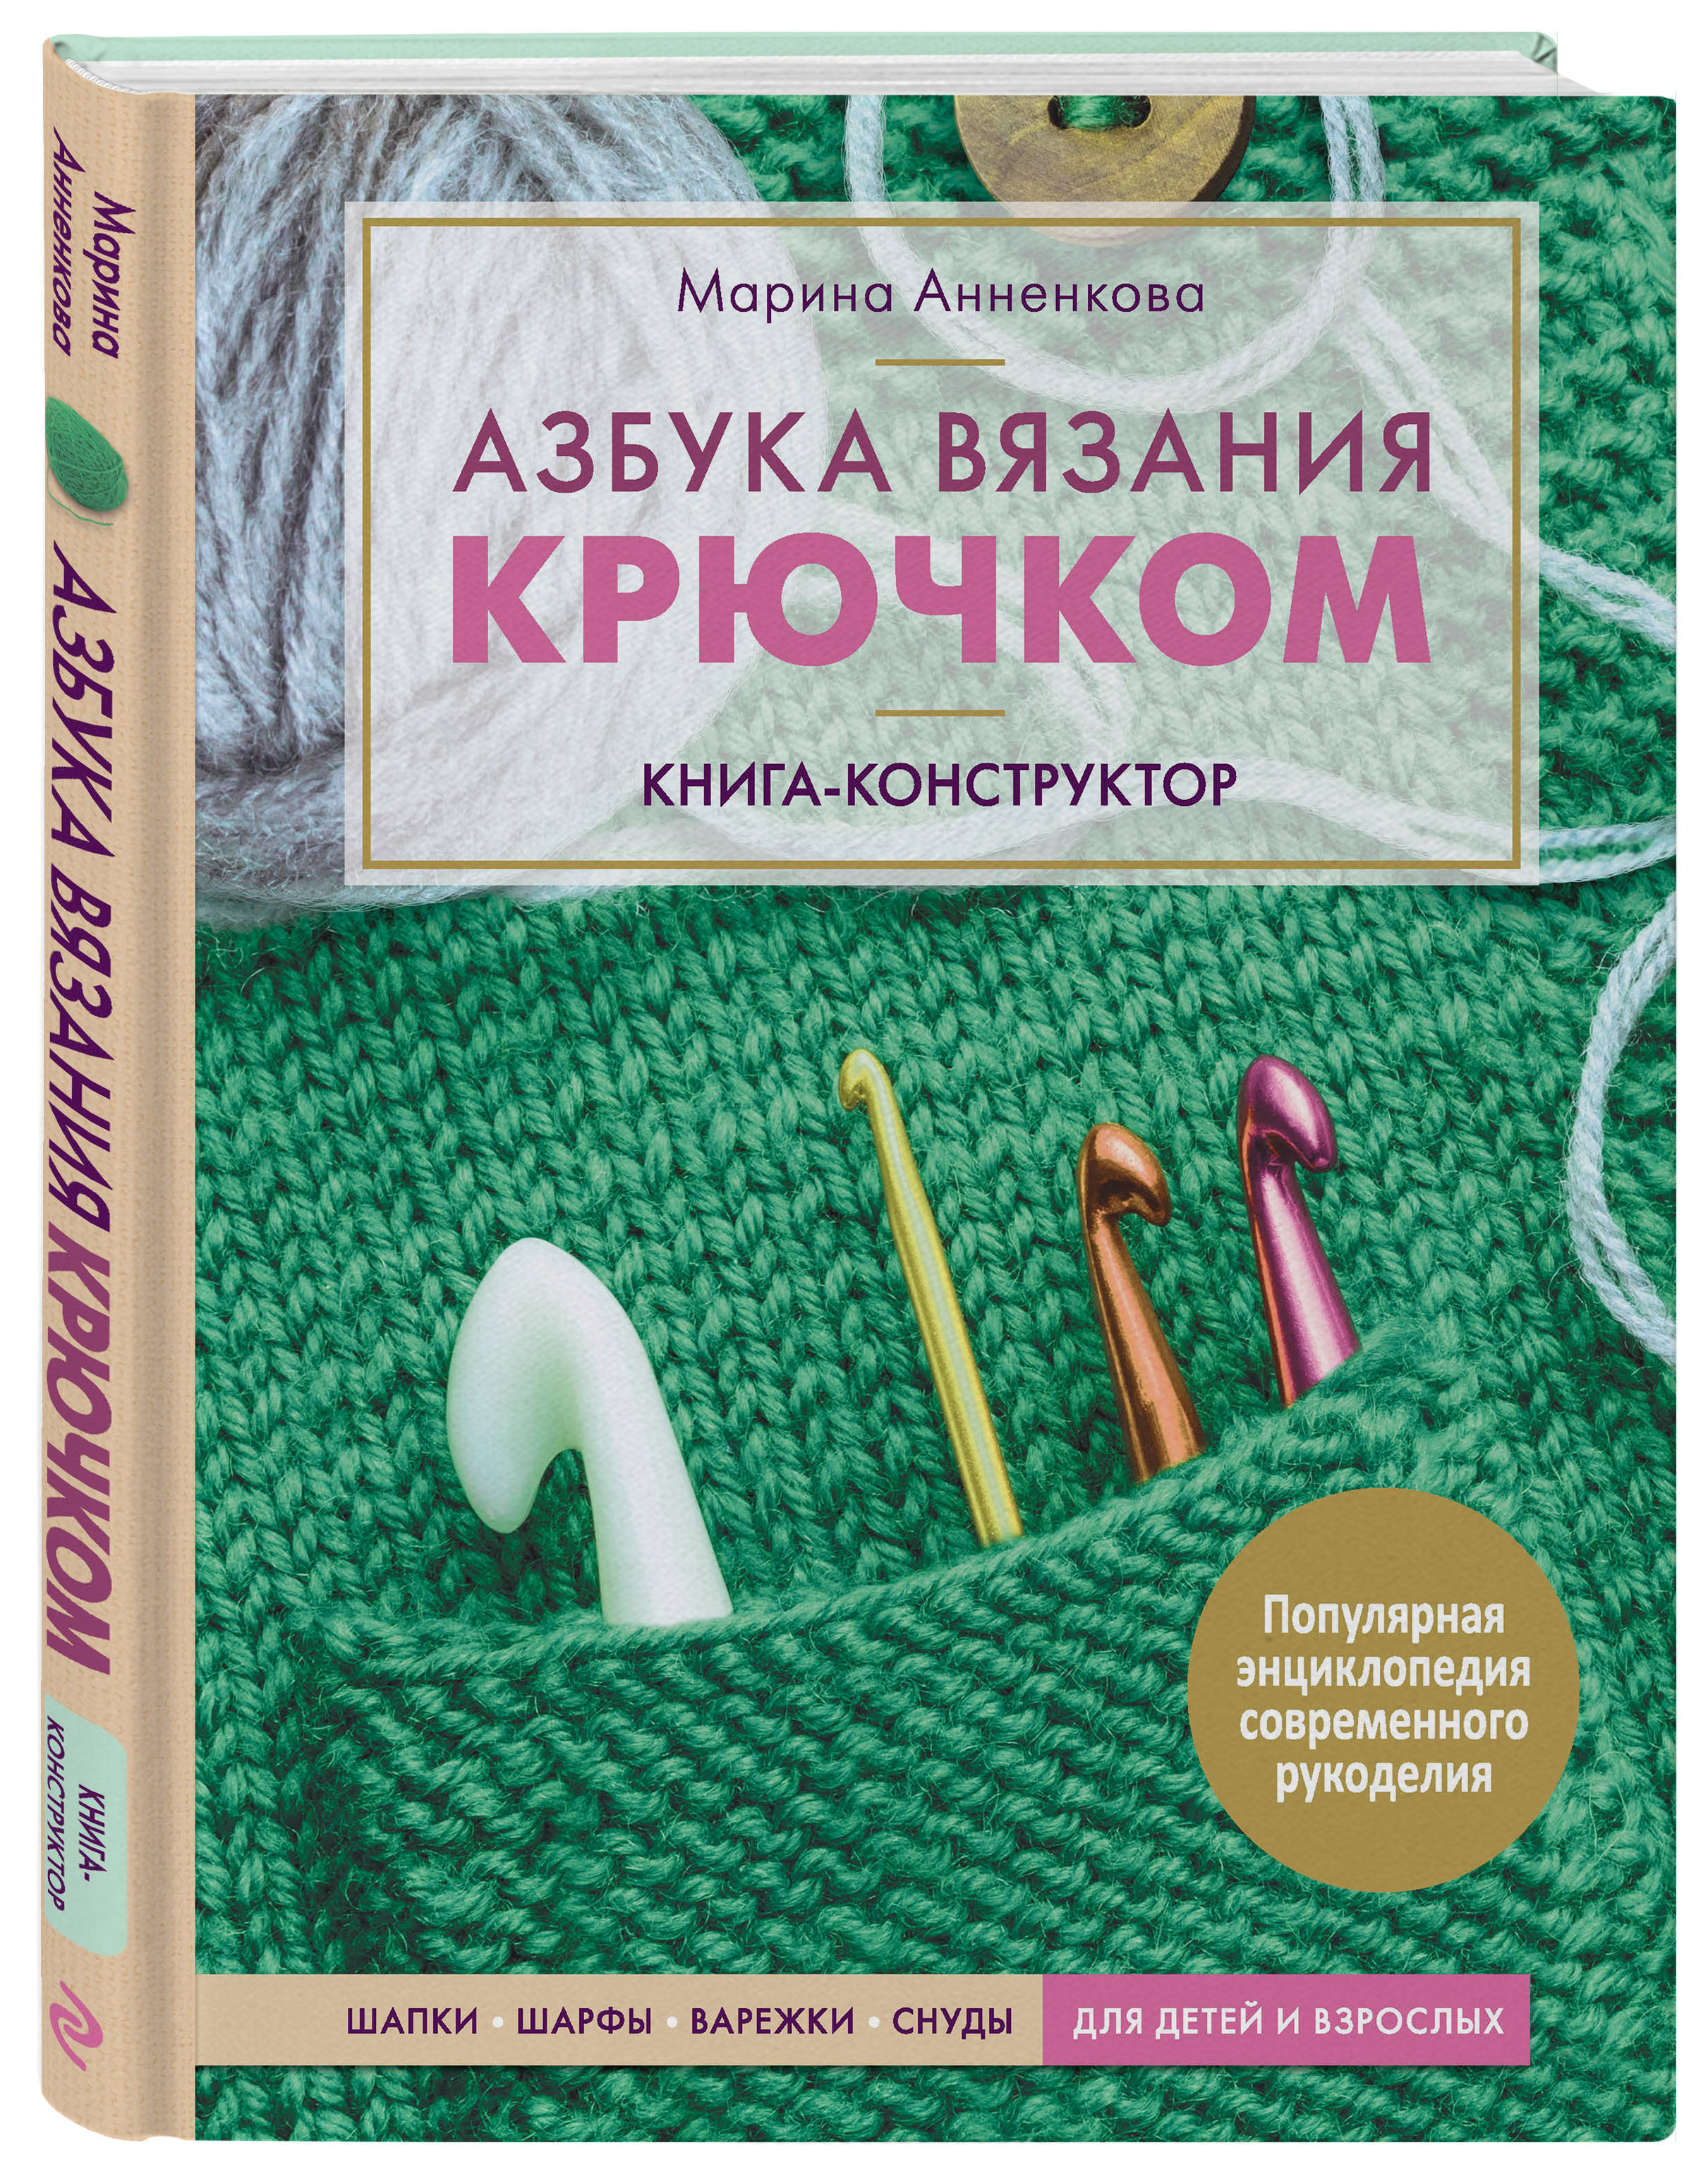 Резинка 2/2 -❤️️ luchistii-sudak.ru ➲ журналы по вязанию✶